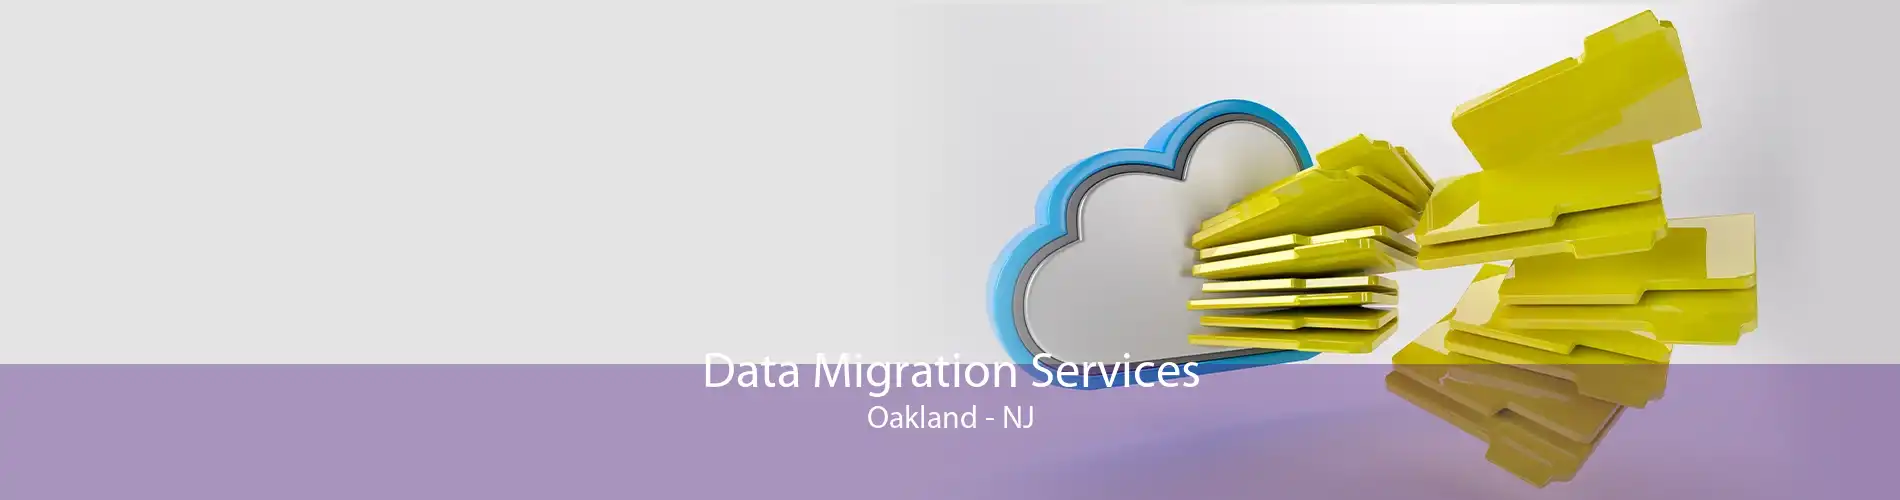 Data Migration Services Oakland - NJ